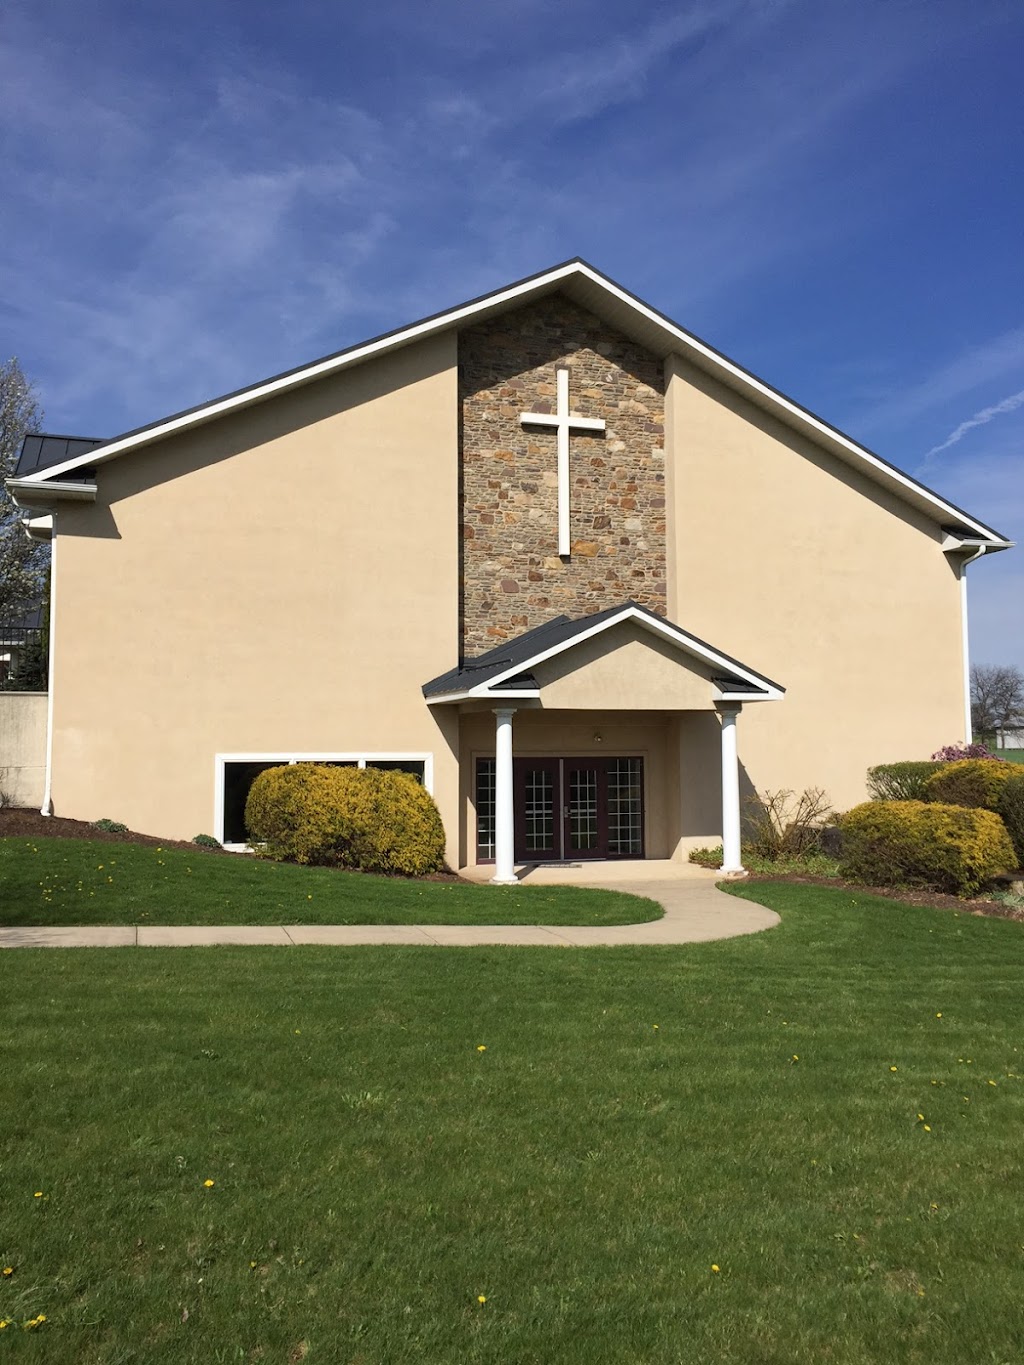 Living Faith Fellowship | 582 Moyer Rd, Souderton, PA 18964 | Phone: (215) 721-8618